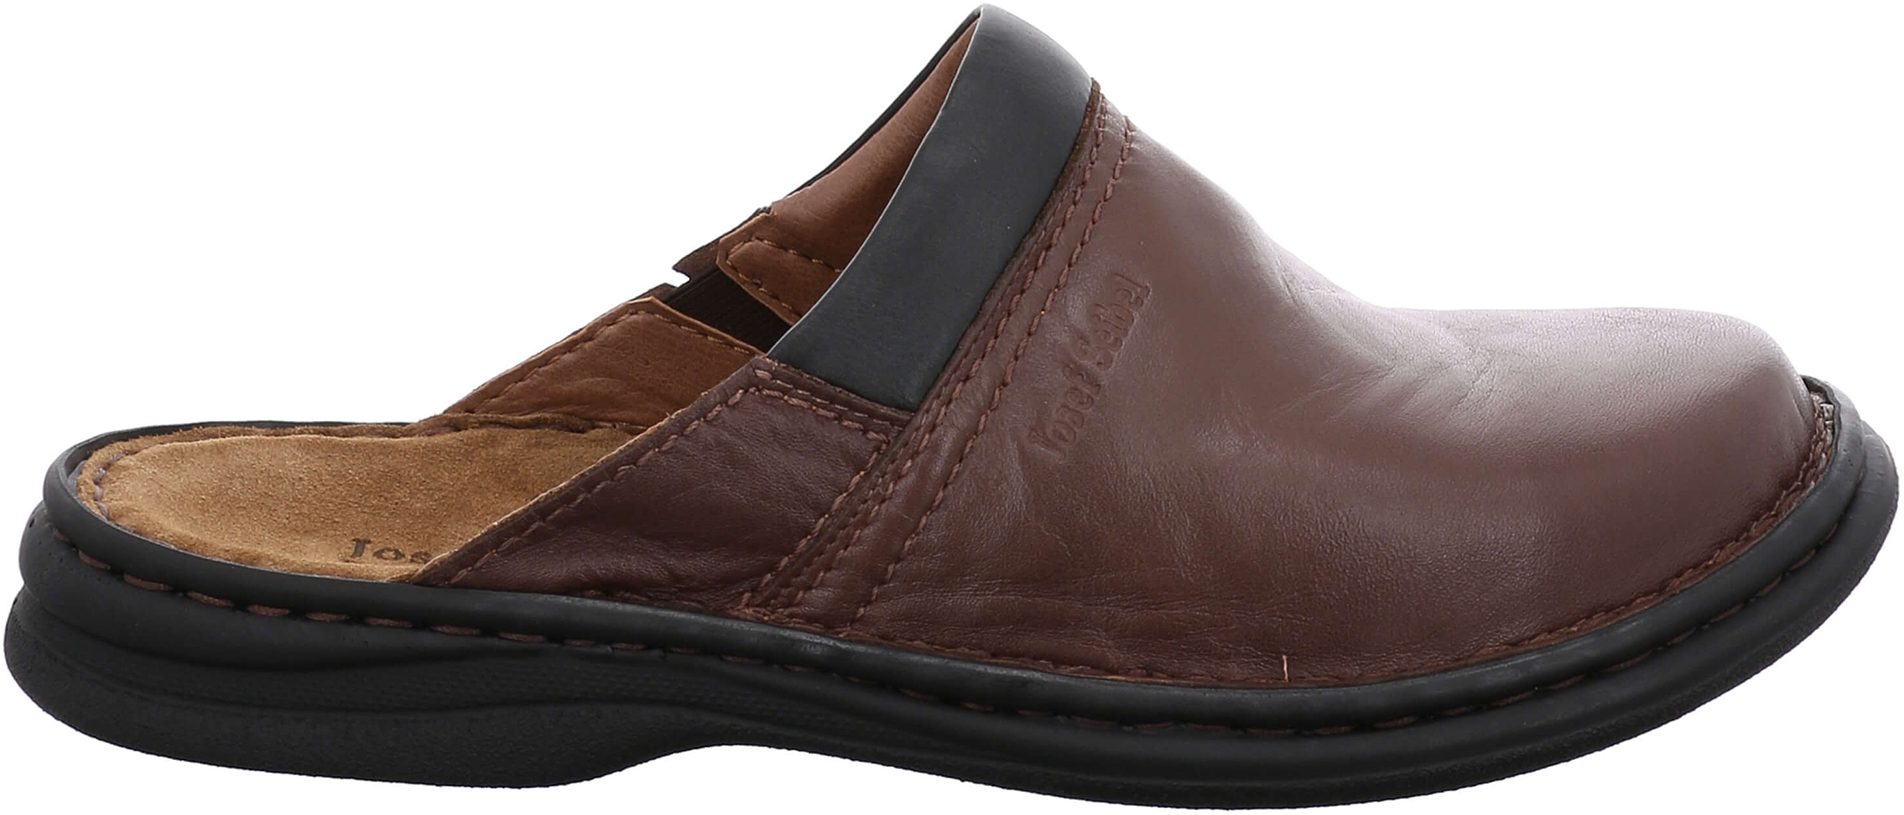 Josef Seibel Max Brandy 10663 37 300 - Mule Sandals - Humphries Shoes